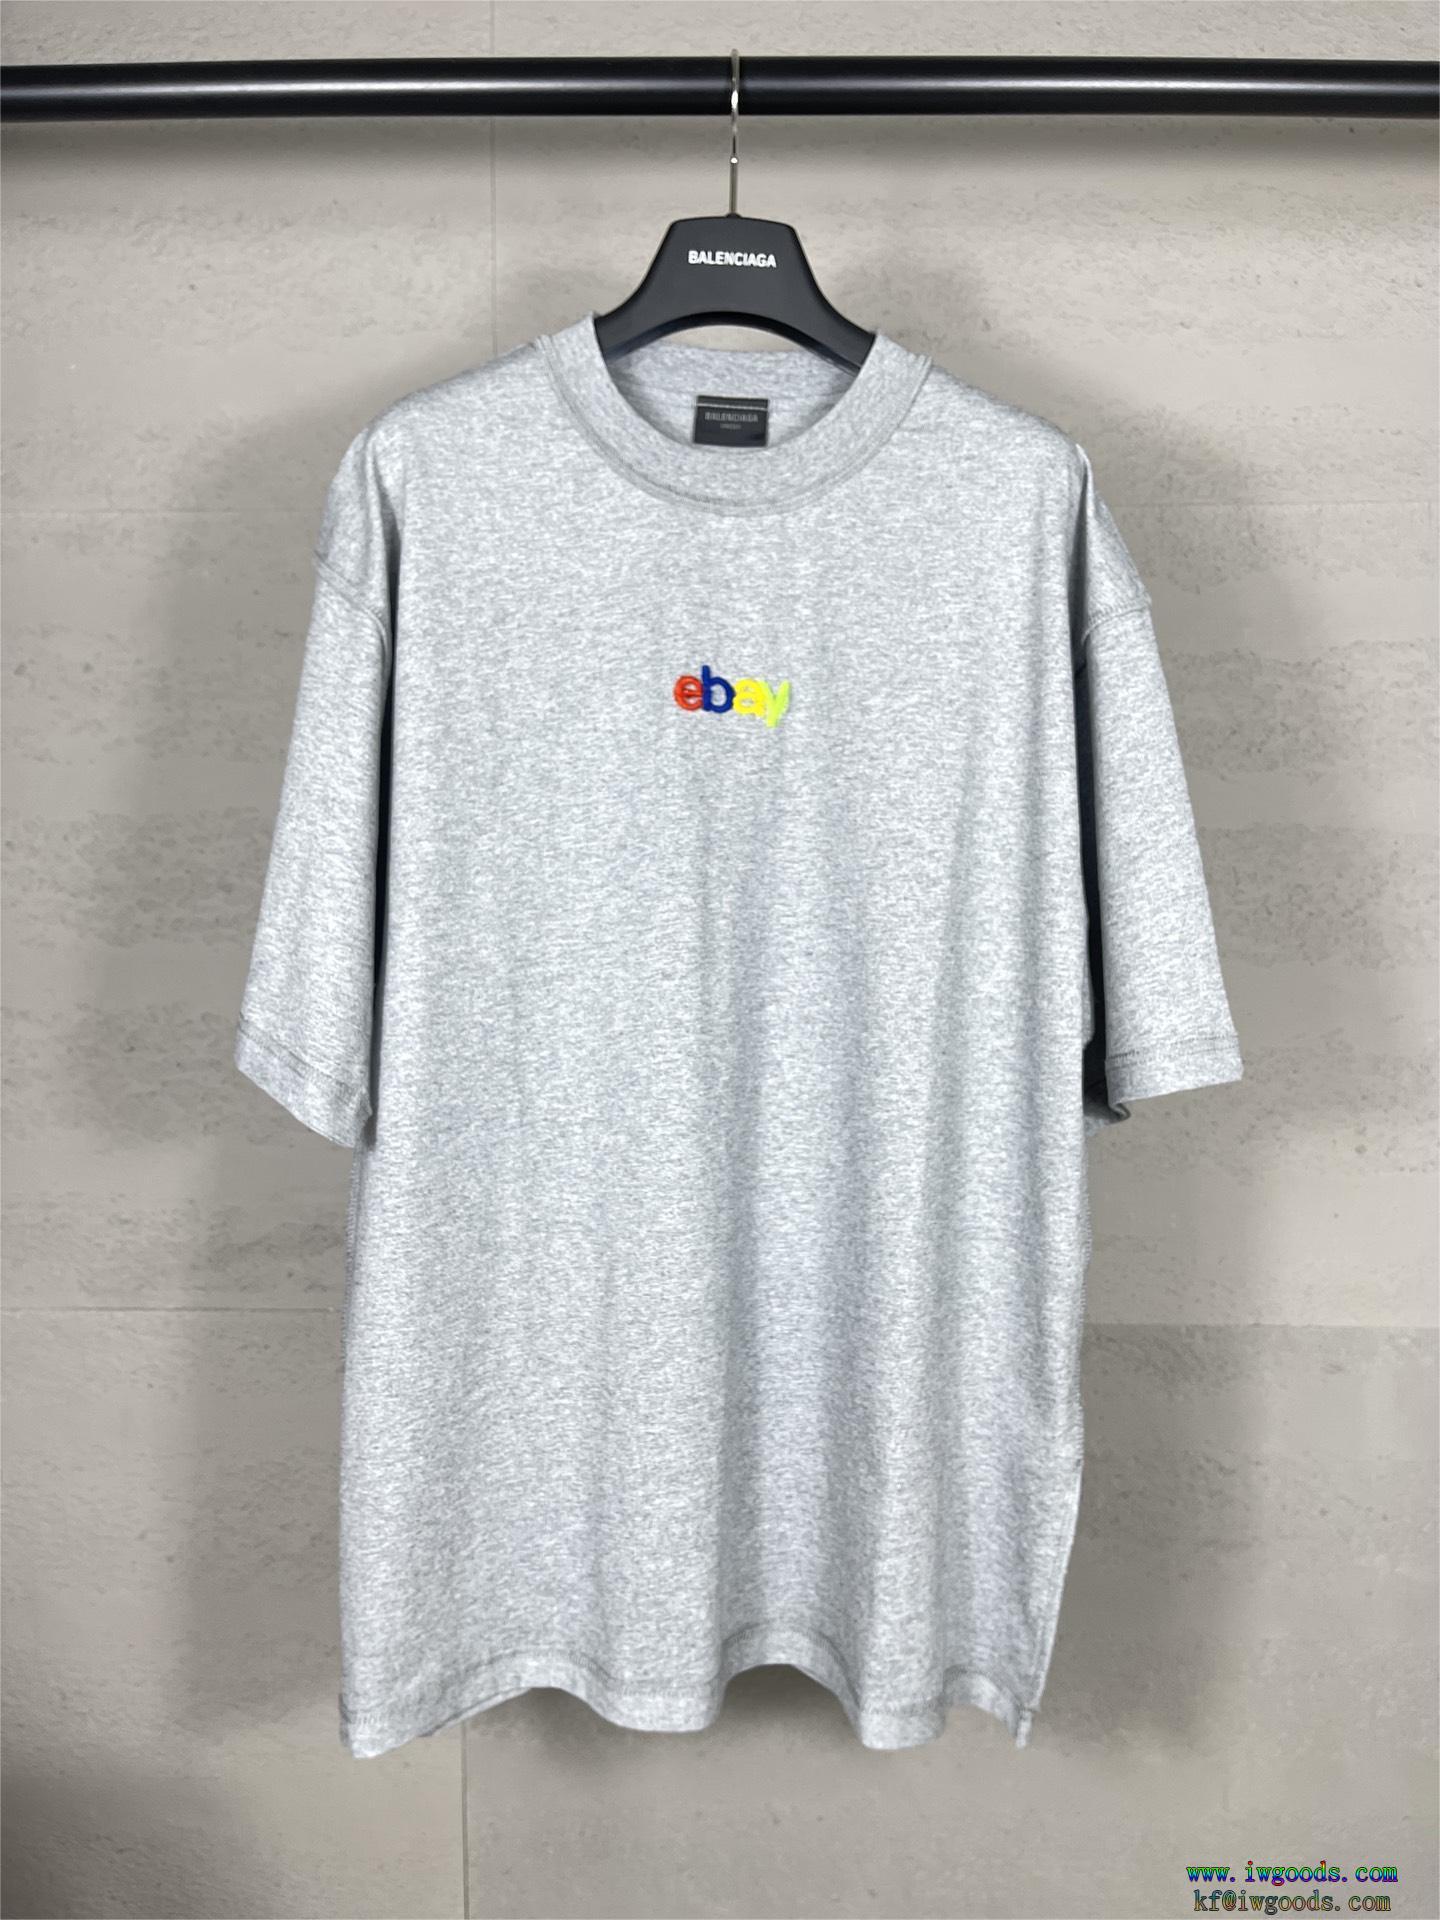 BALENCIAGA x ebay半袖Tシャツ【ユニセックス】ブランド 偽物 激安,BALENCIAGA x ebayブランド コピー